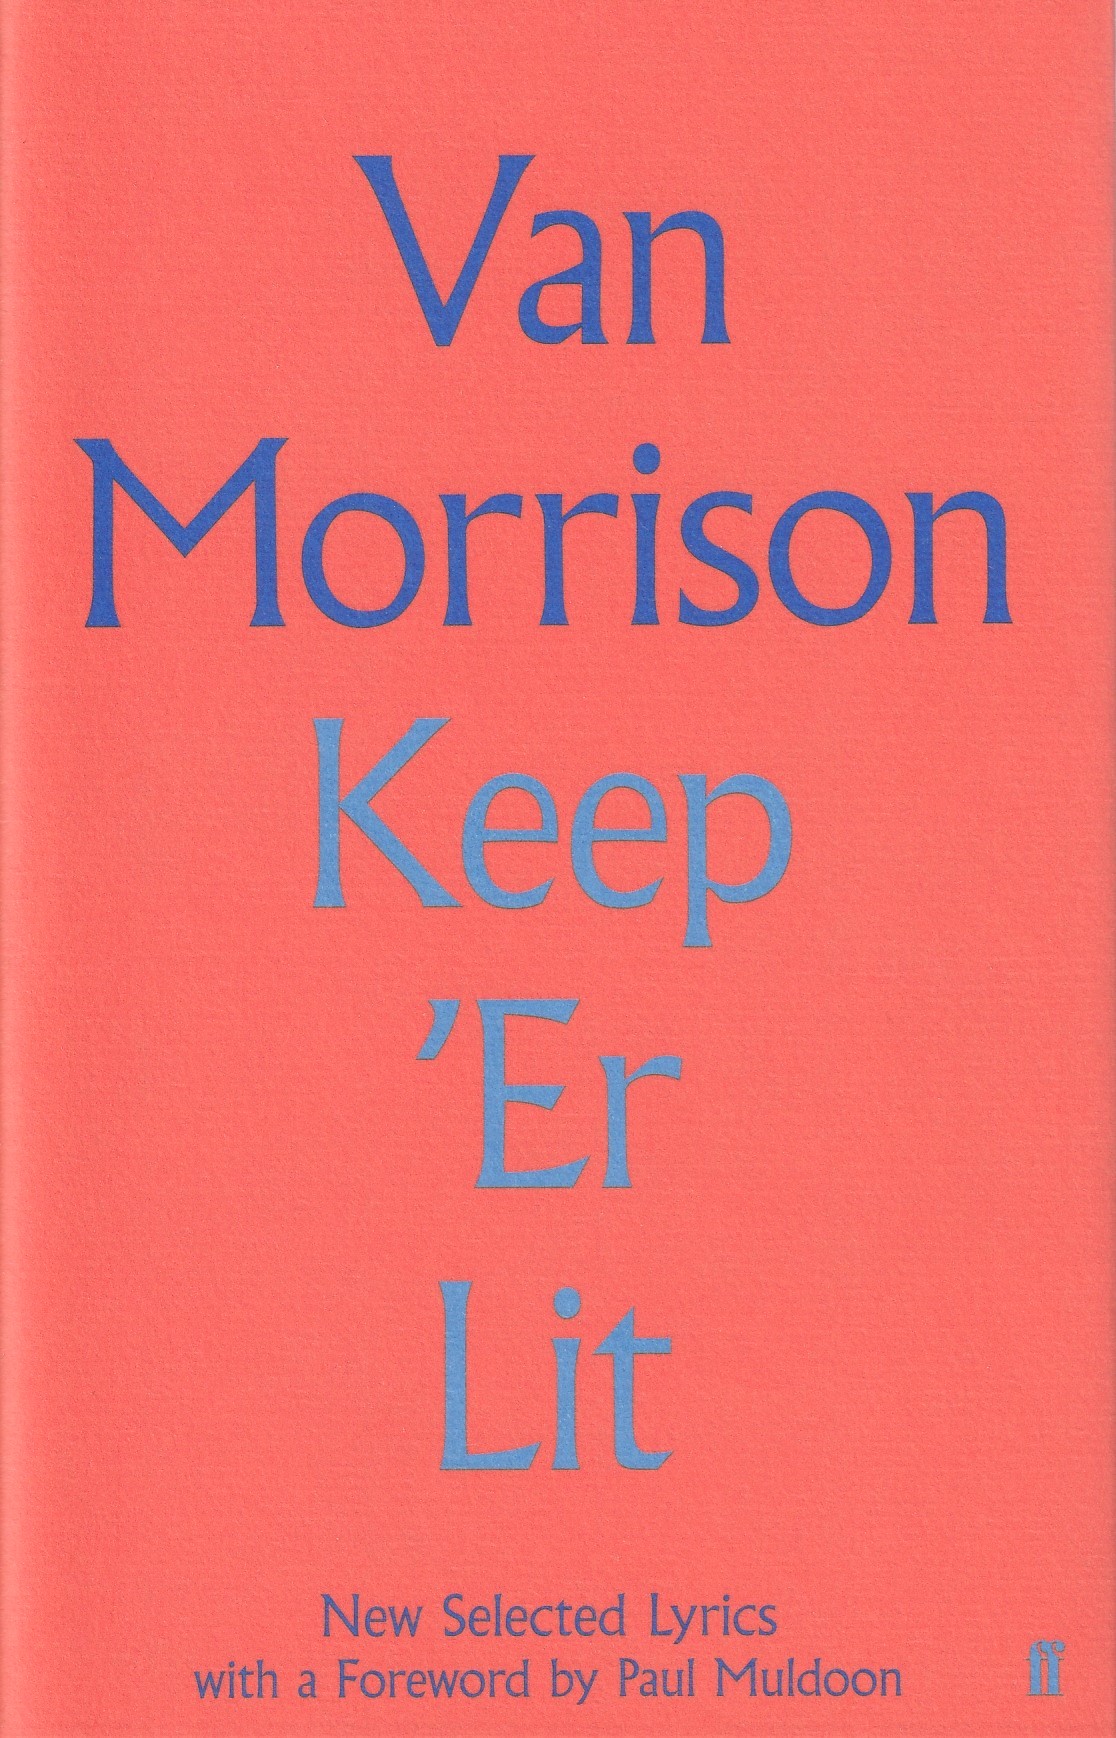 Keep ‘Er Lit: New Selected Lyrics by Van Morrison